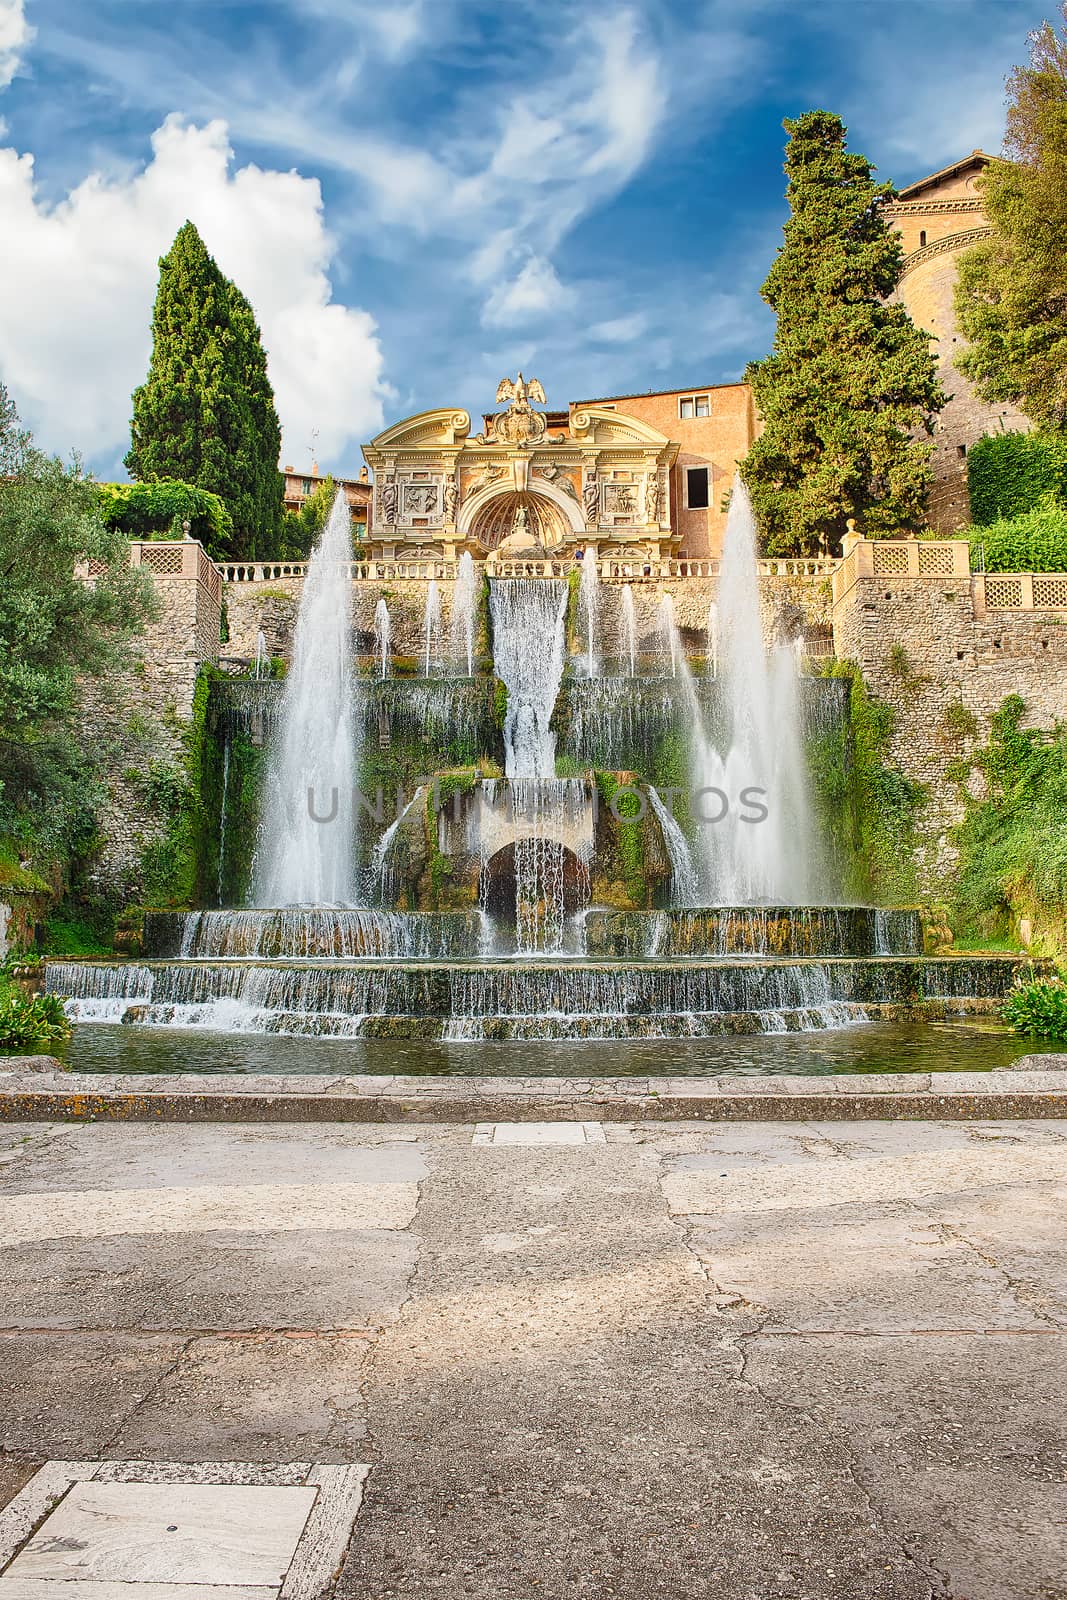 The Fountain of Neptune, iconic landmark in Villa d'Este, Tivoli, Italy